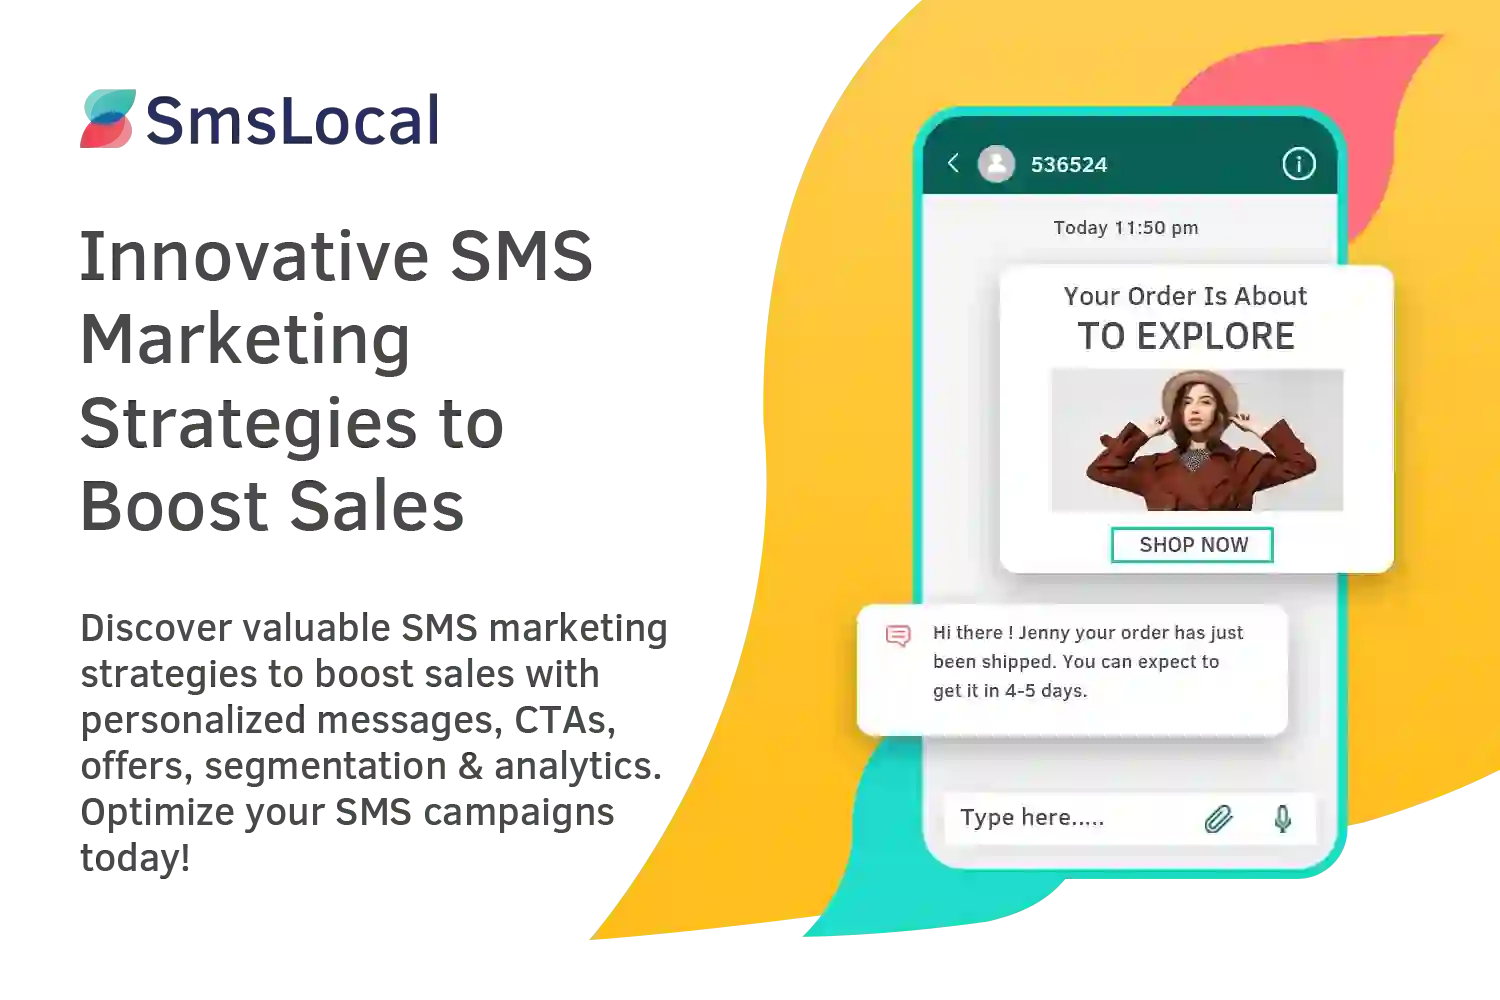 Innovative-SMS-Marketing-Strategies-to-Boost-Sales-1-1-1 (1) (1)